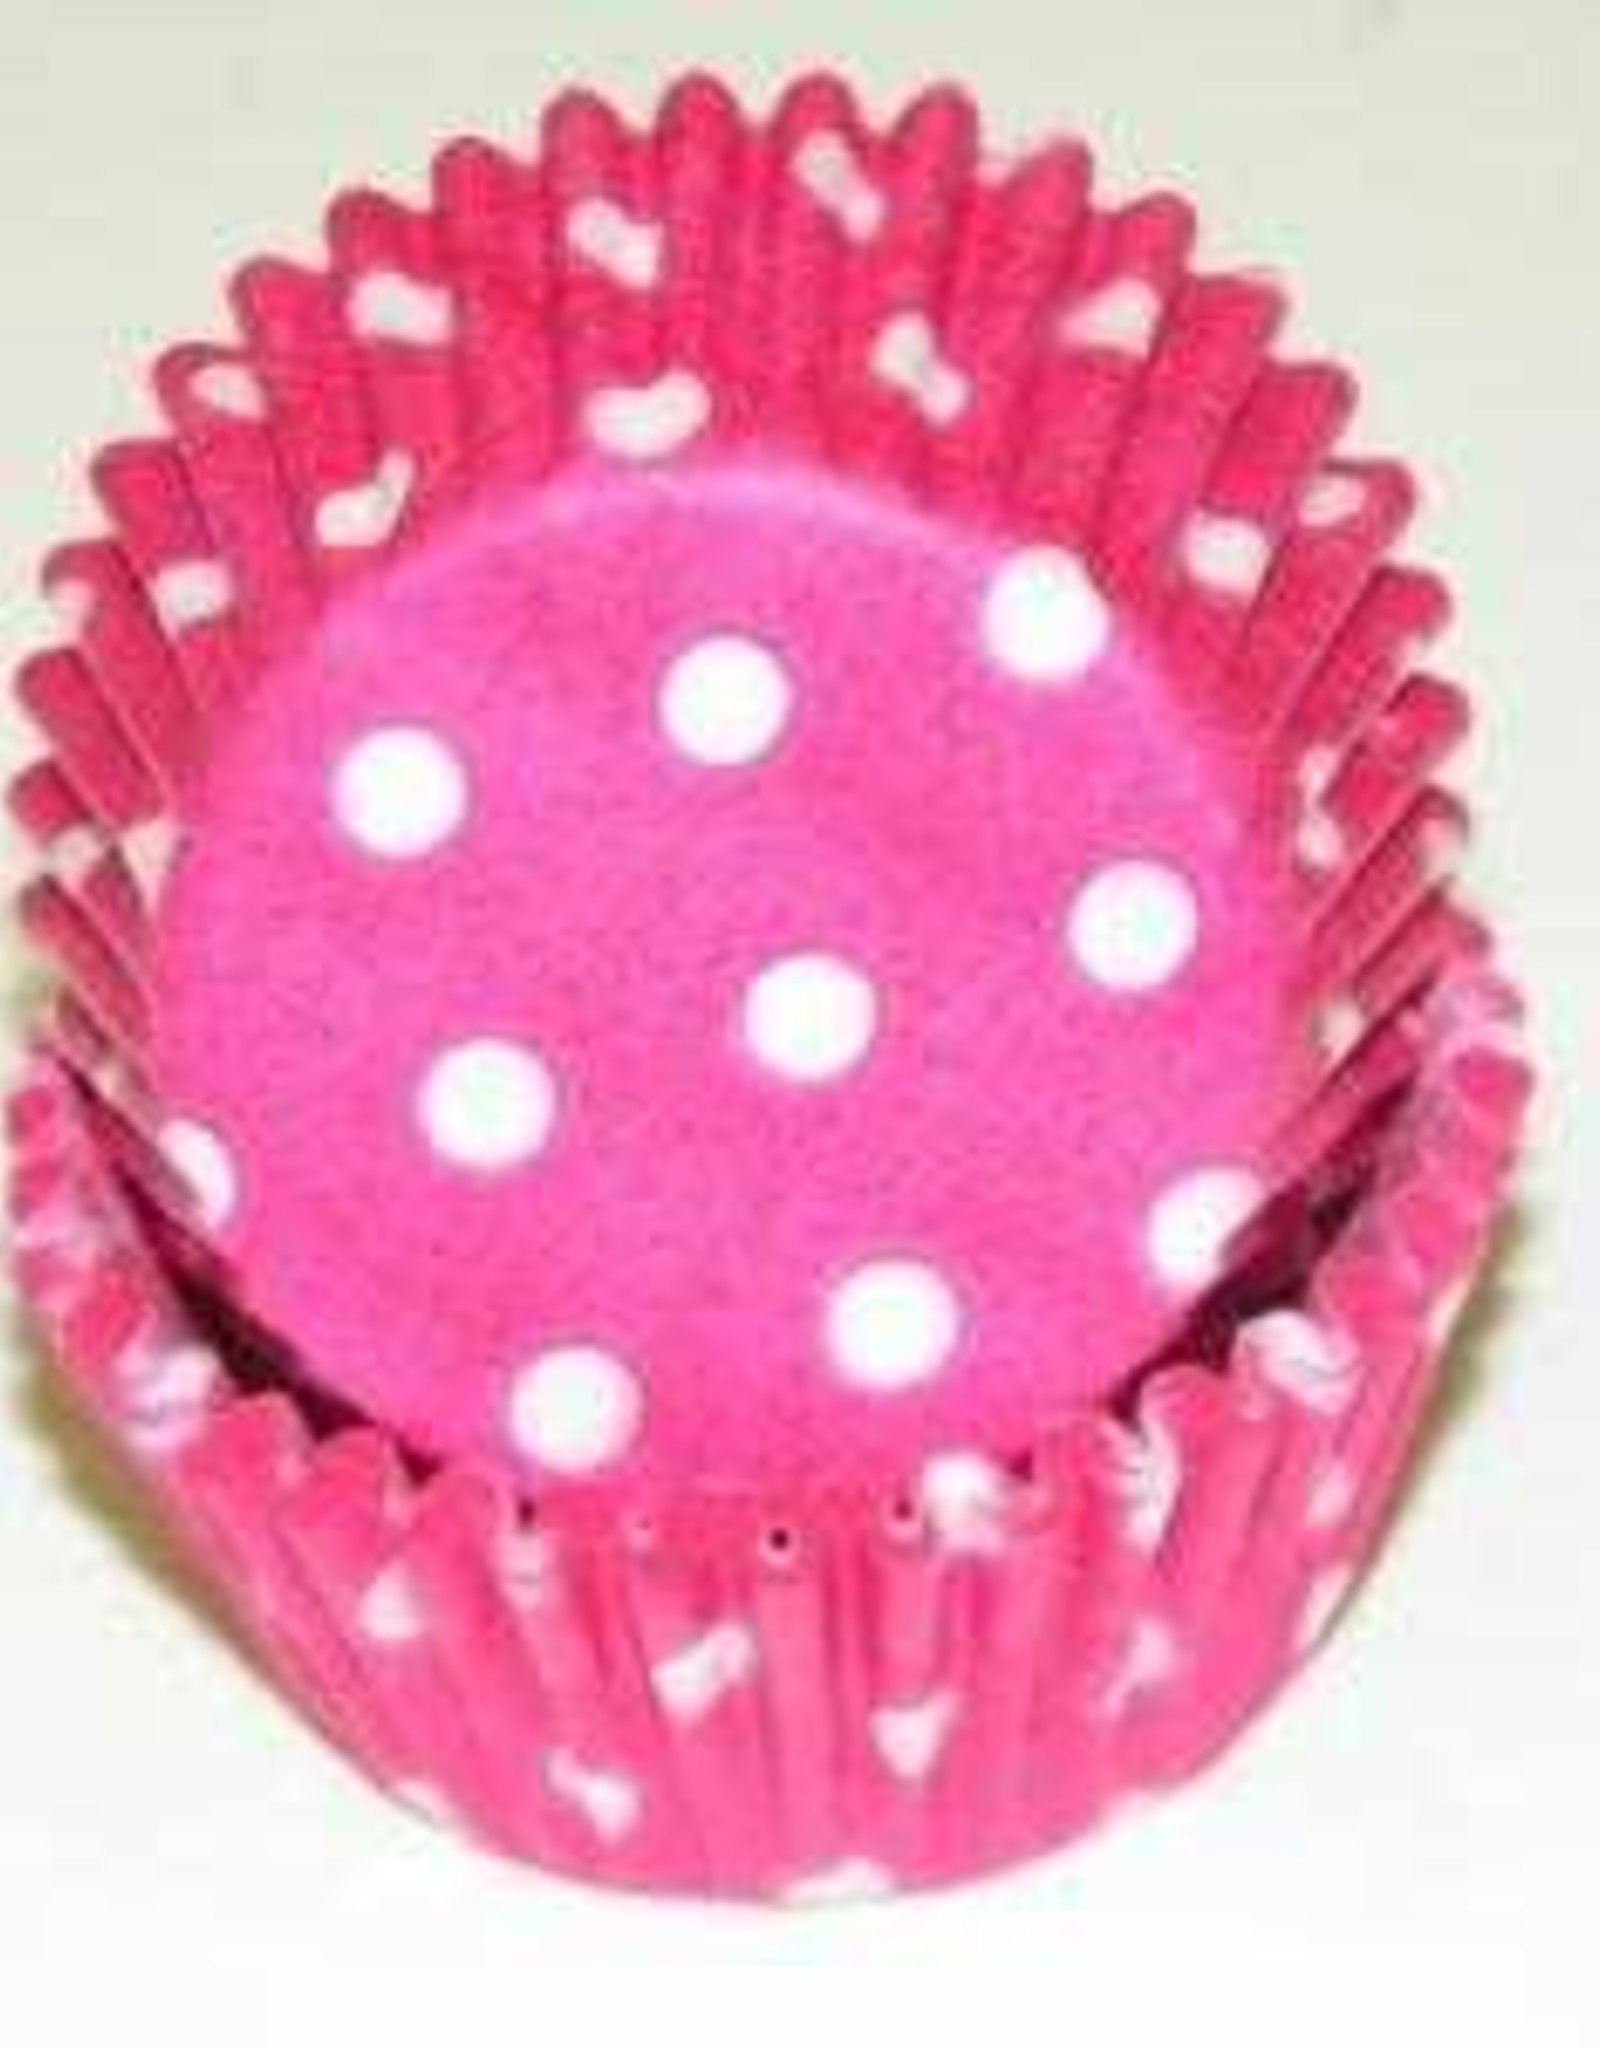 Hot Pink Polka Dot Baking Cups Mini (40-50 ct)